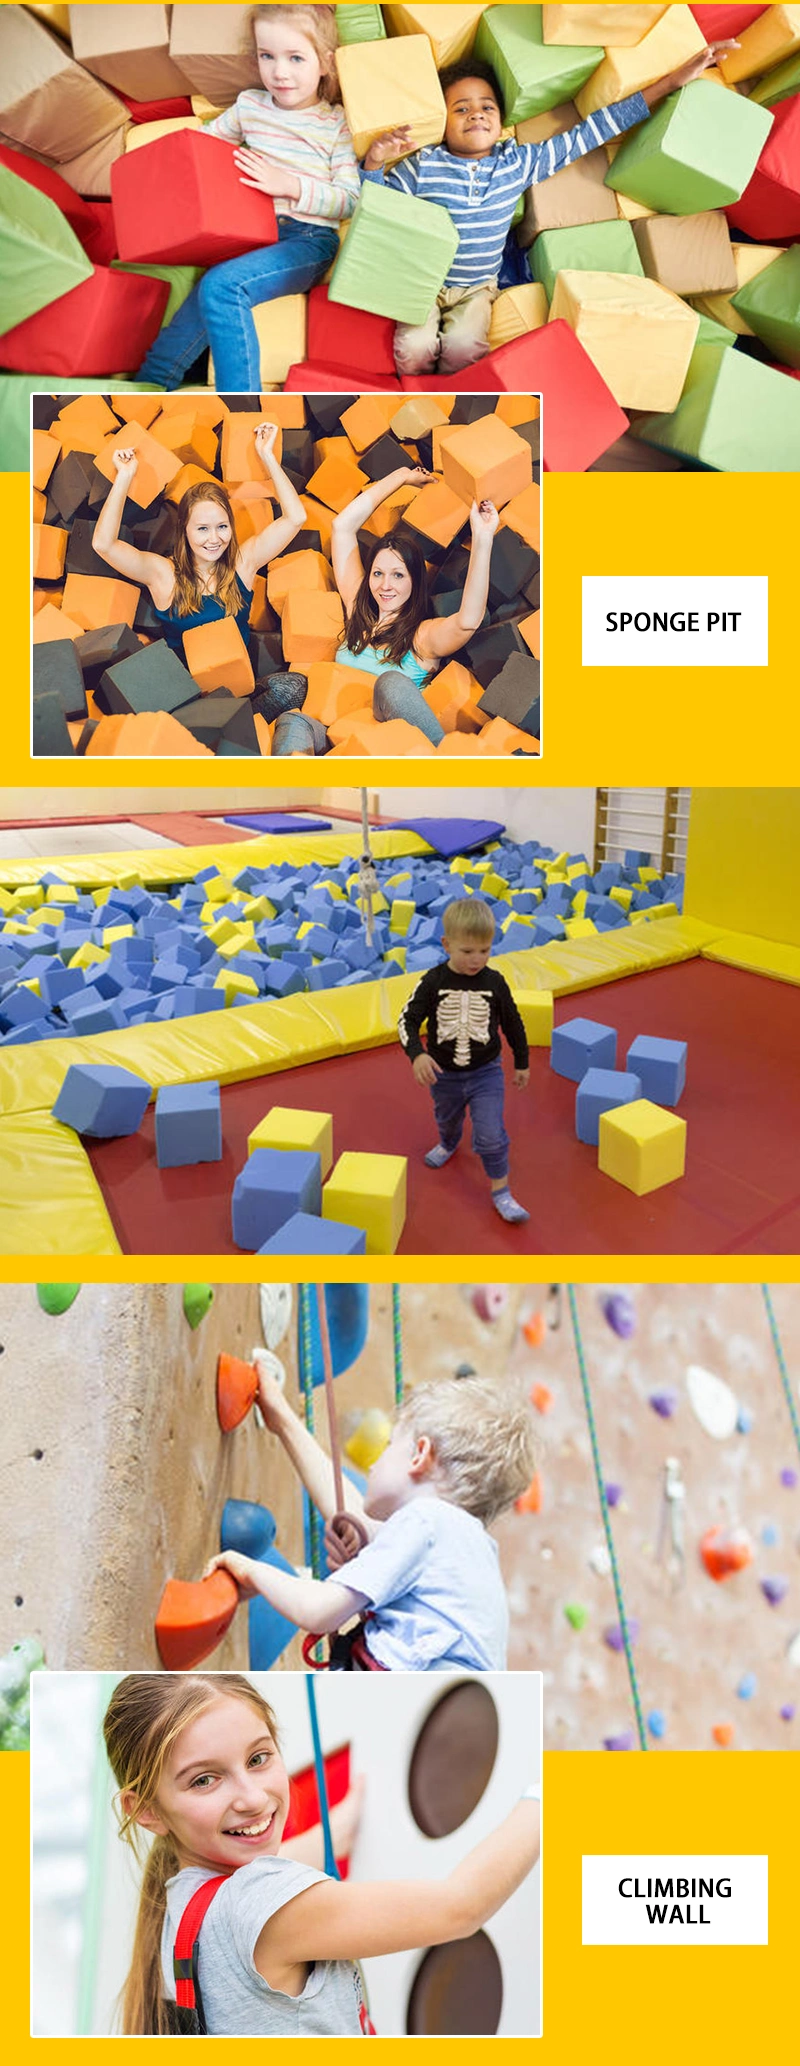 Sviya Indoor Marvelous Kids Fun Super Durable Commercial Trampoline Park